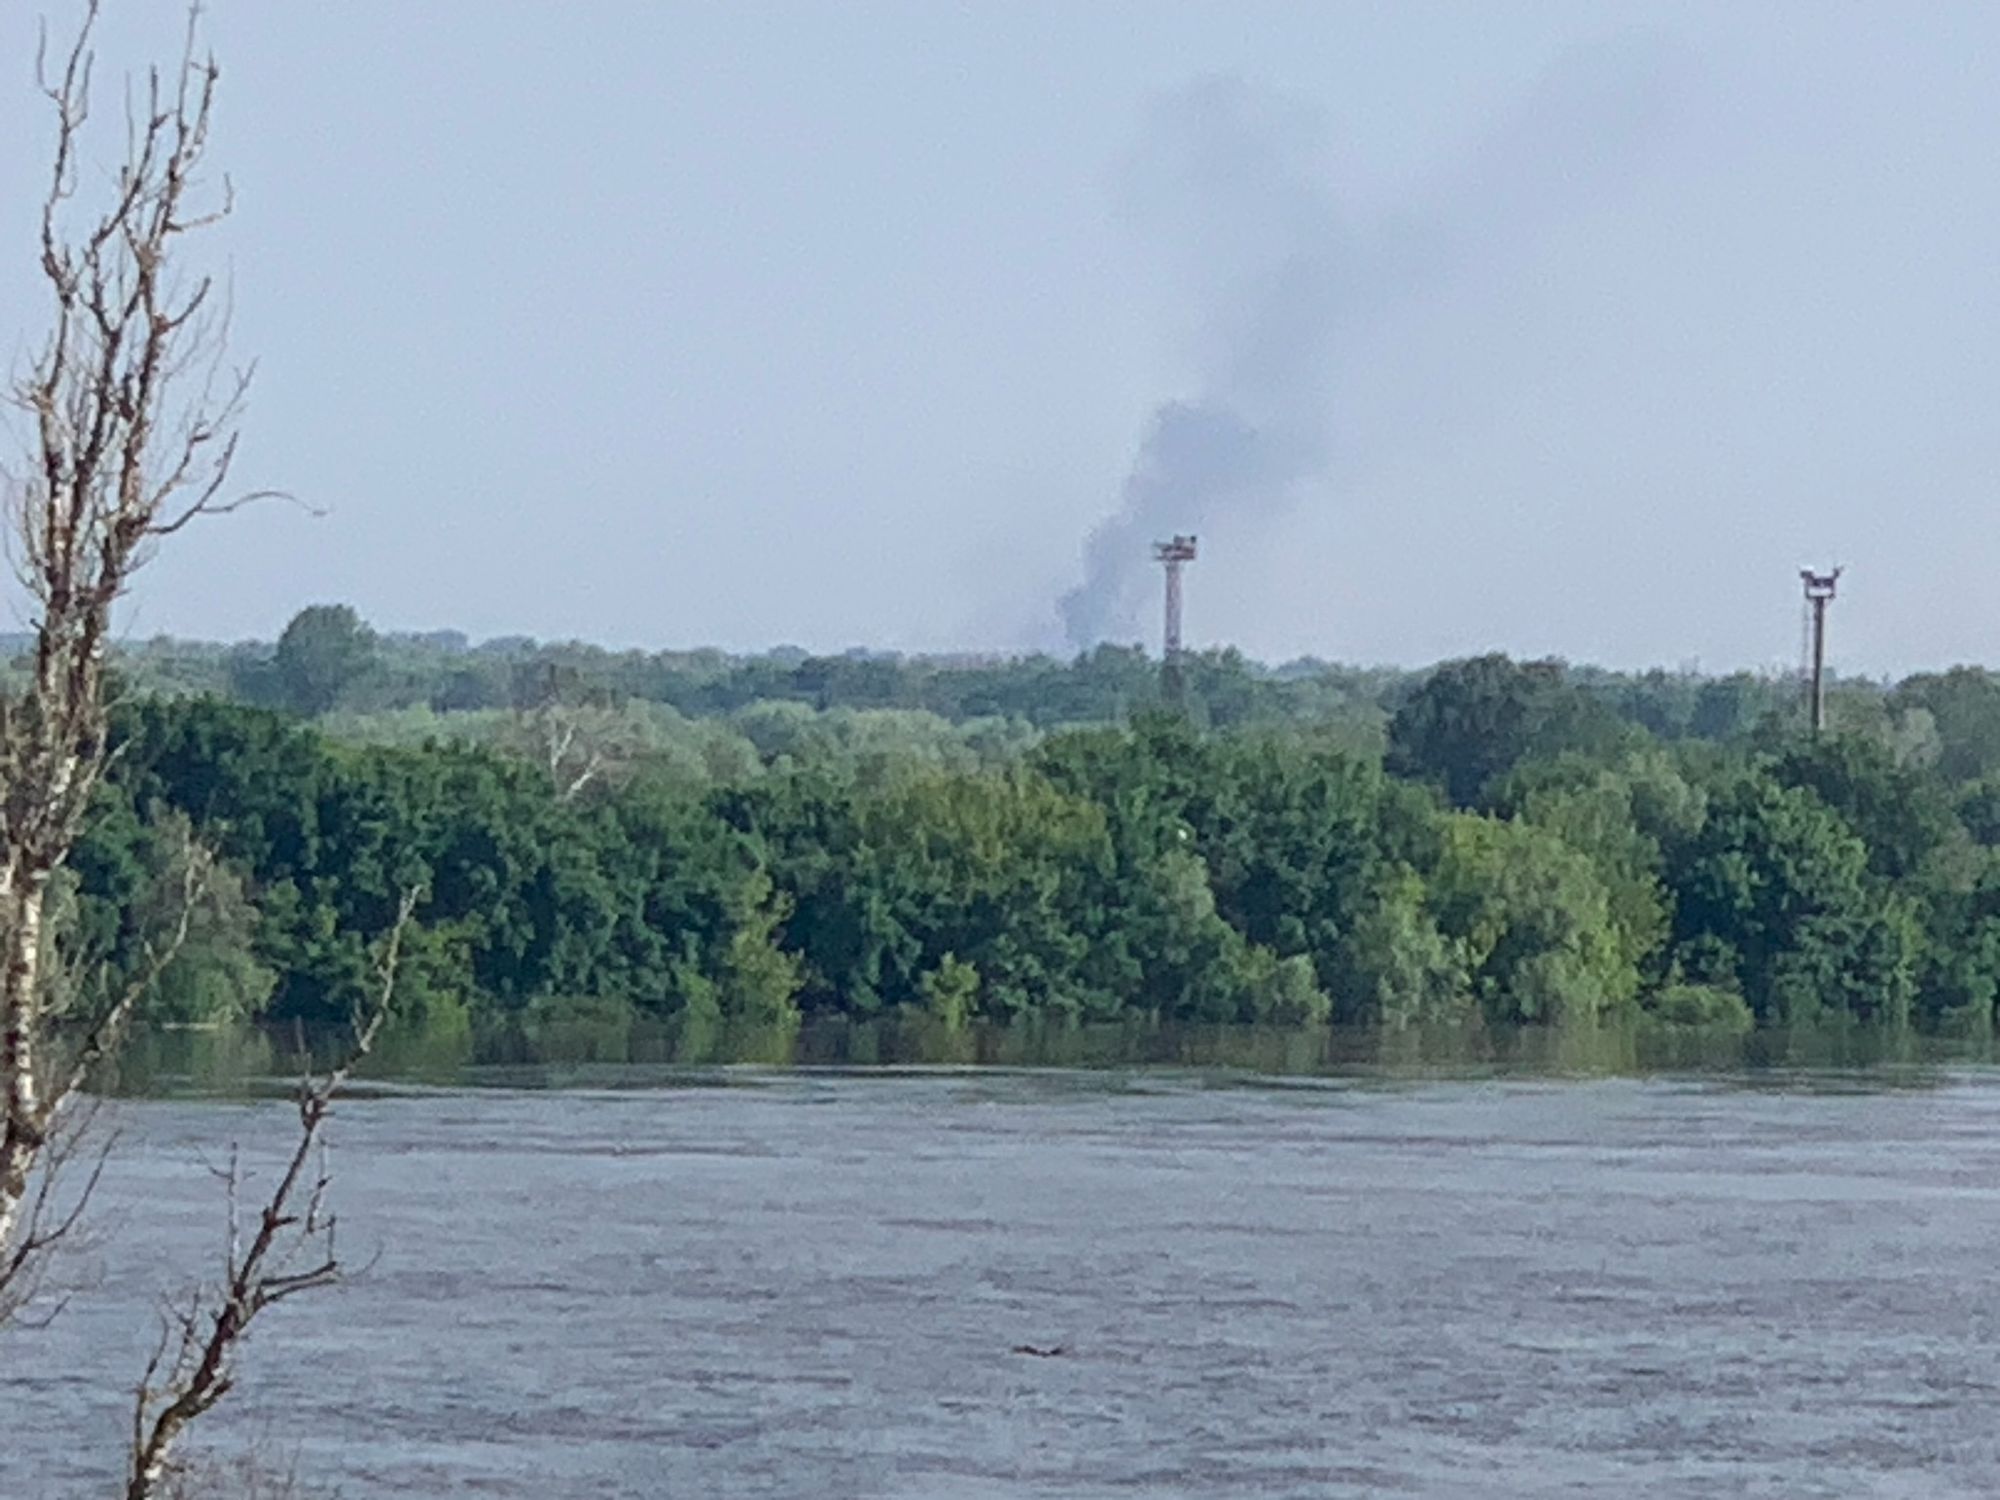 Ukrhydroenergo: Kakhovka dam 'beyond repair' after explosion